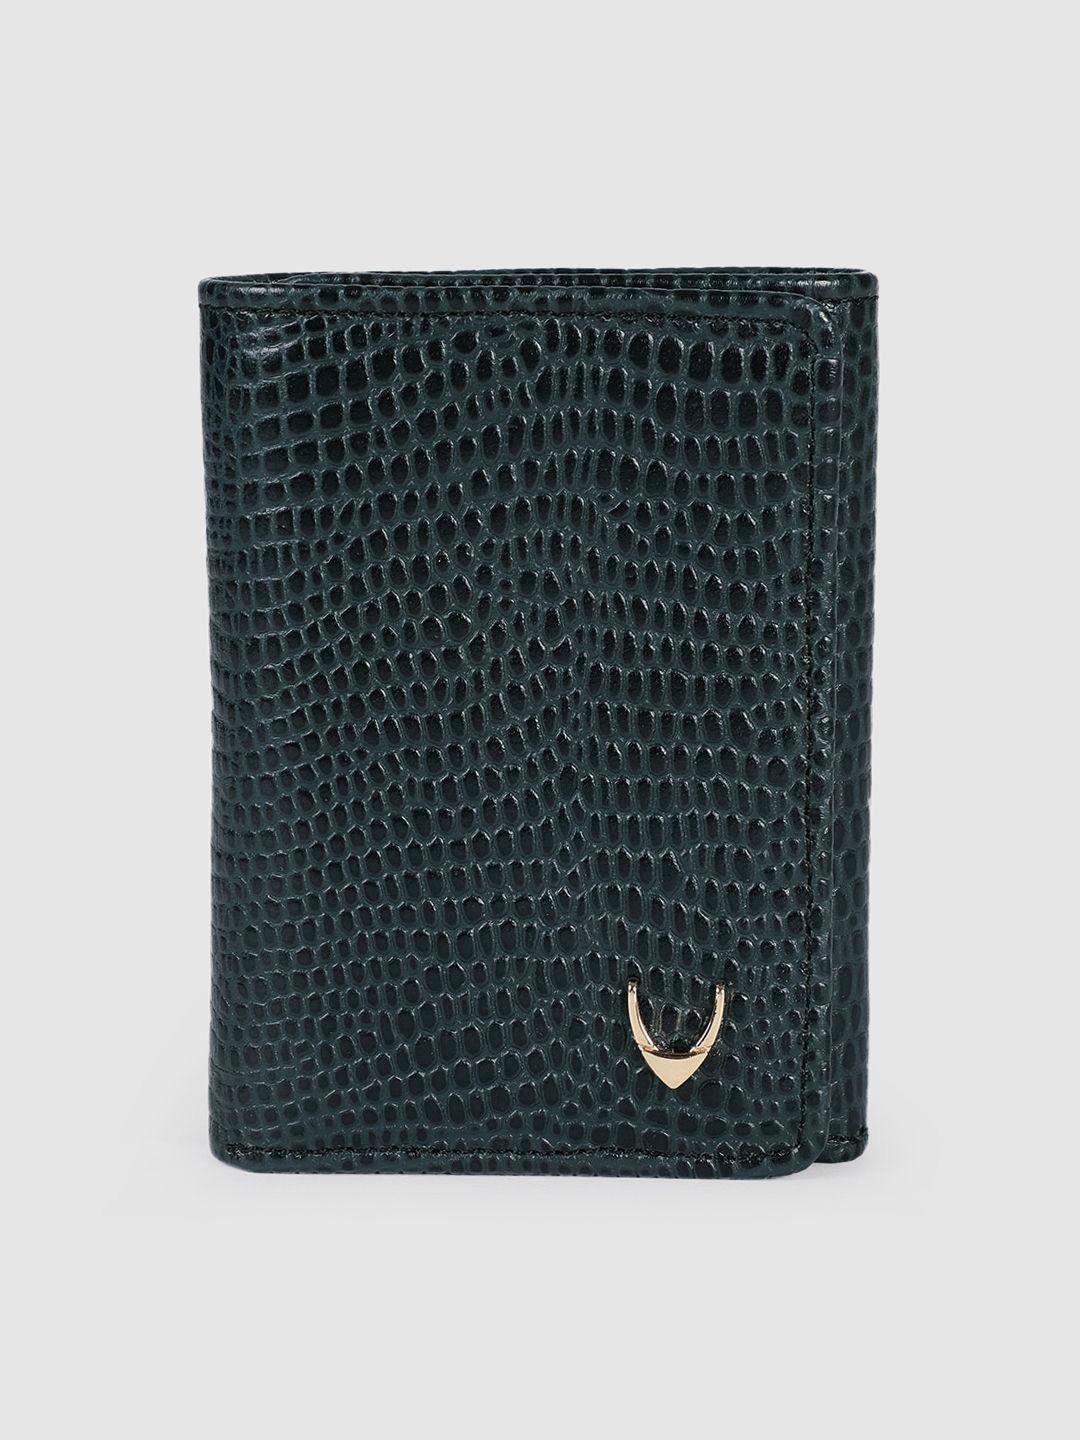 hidesign men blue snakeskin textured three fold leather wallet